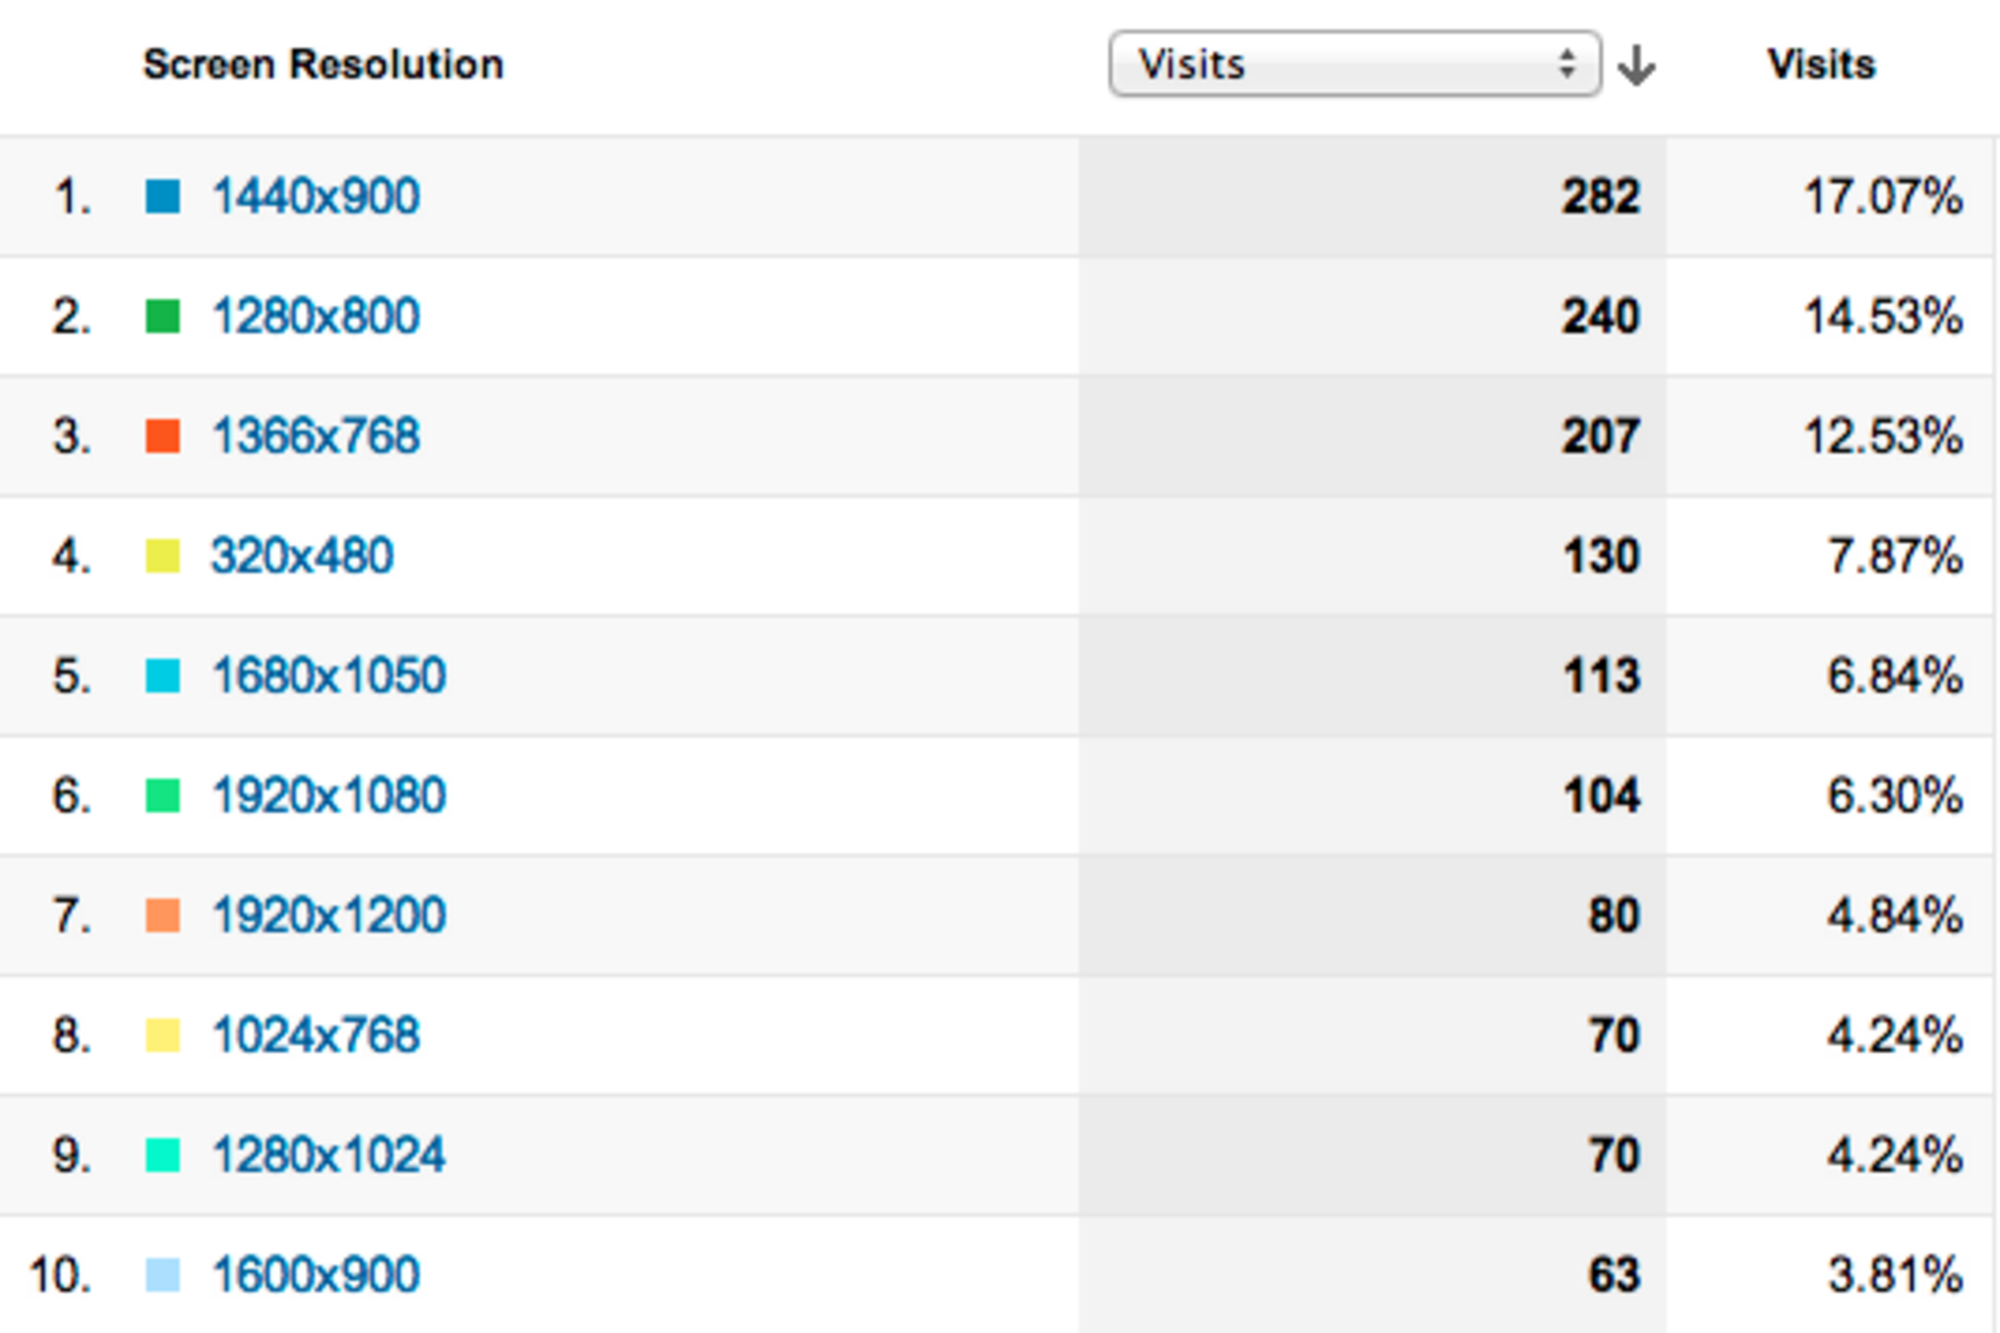 Screenshot of google analytics showing screen resolution statistics